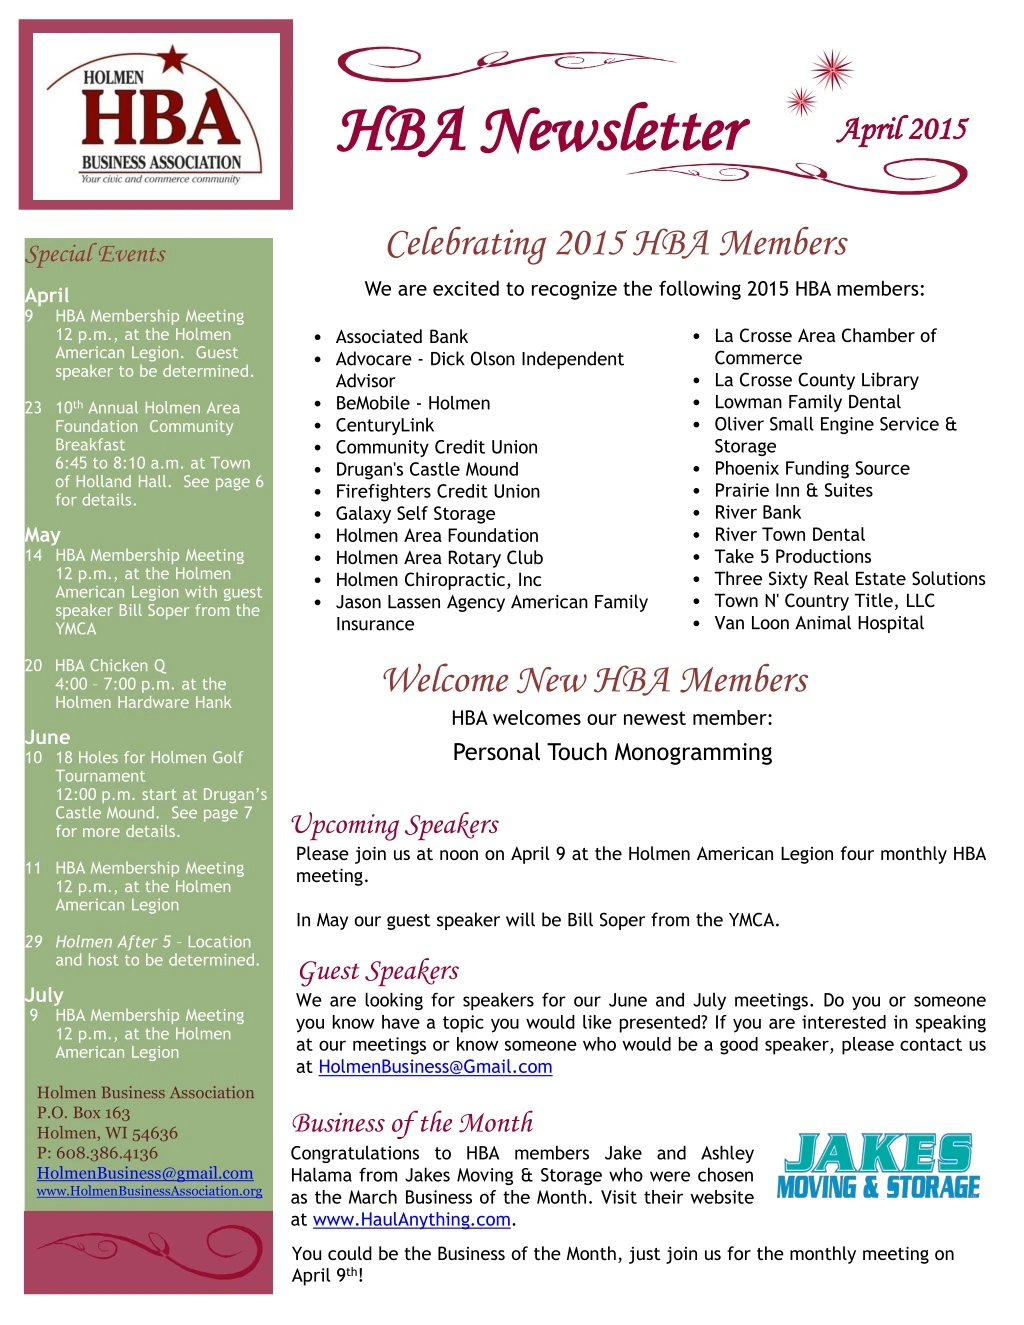 special events april hba membership meeting